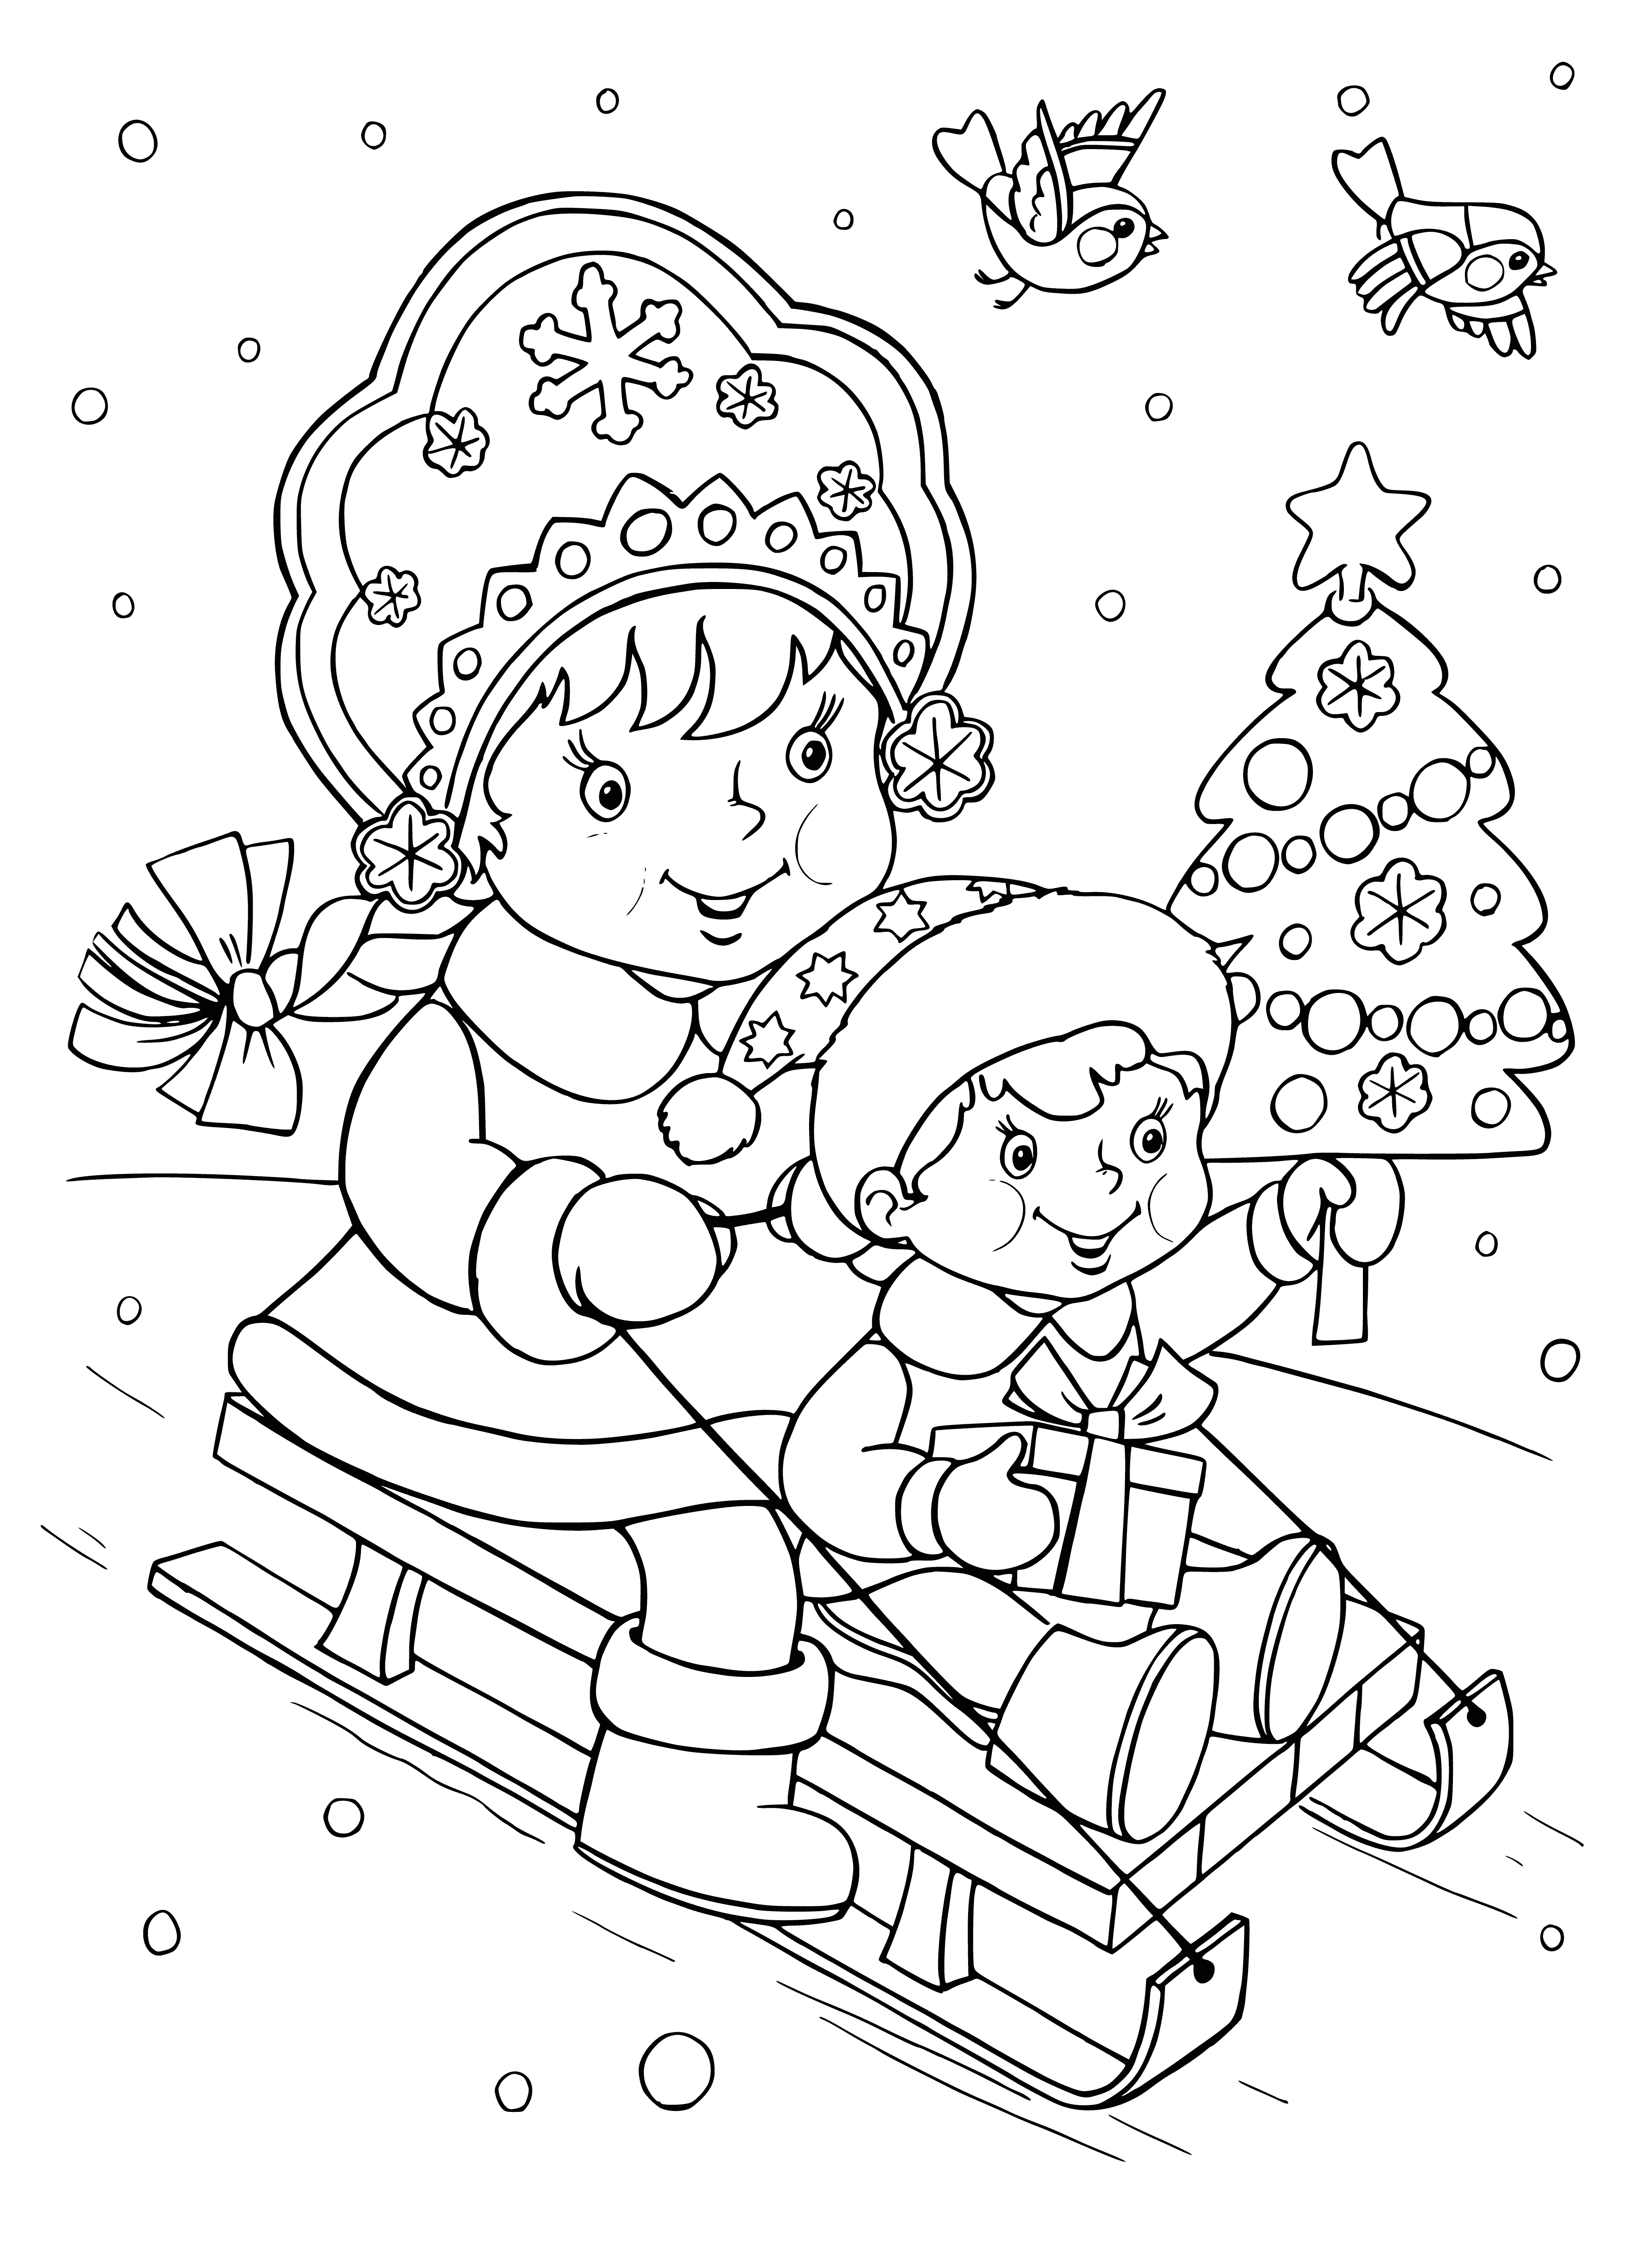 Snow Maiden na sankach kolorowanka